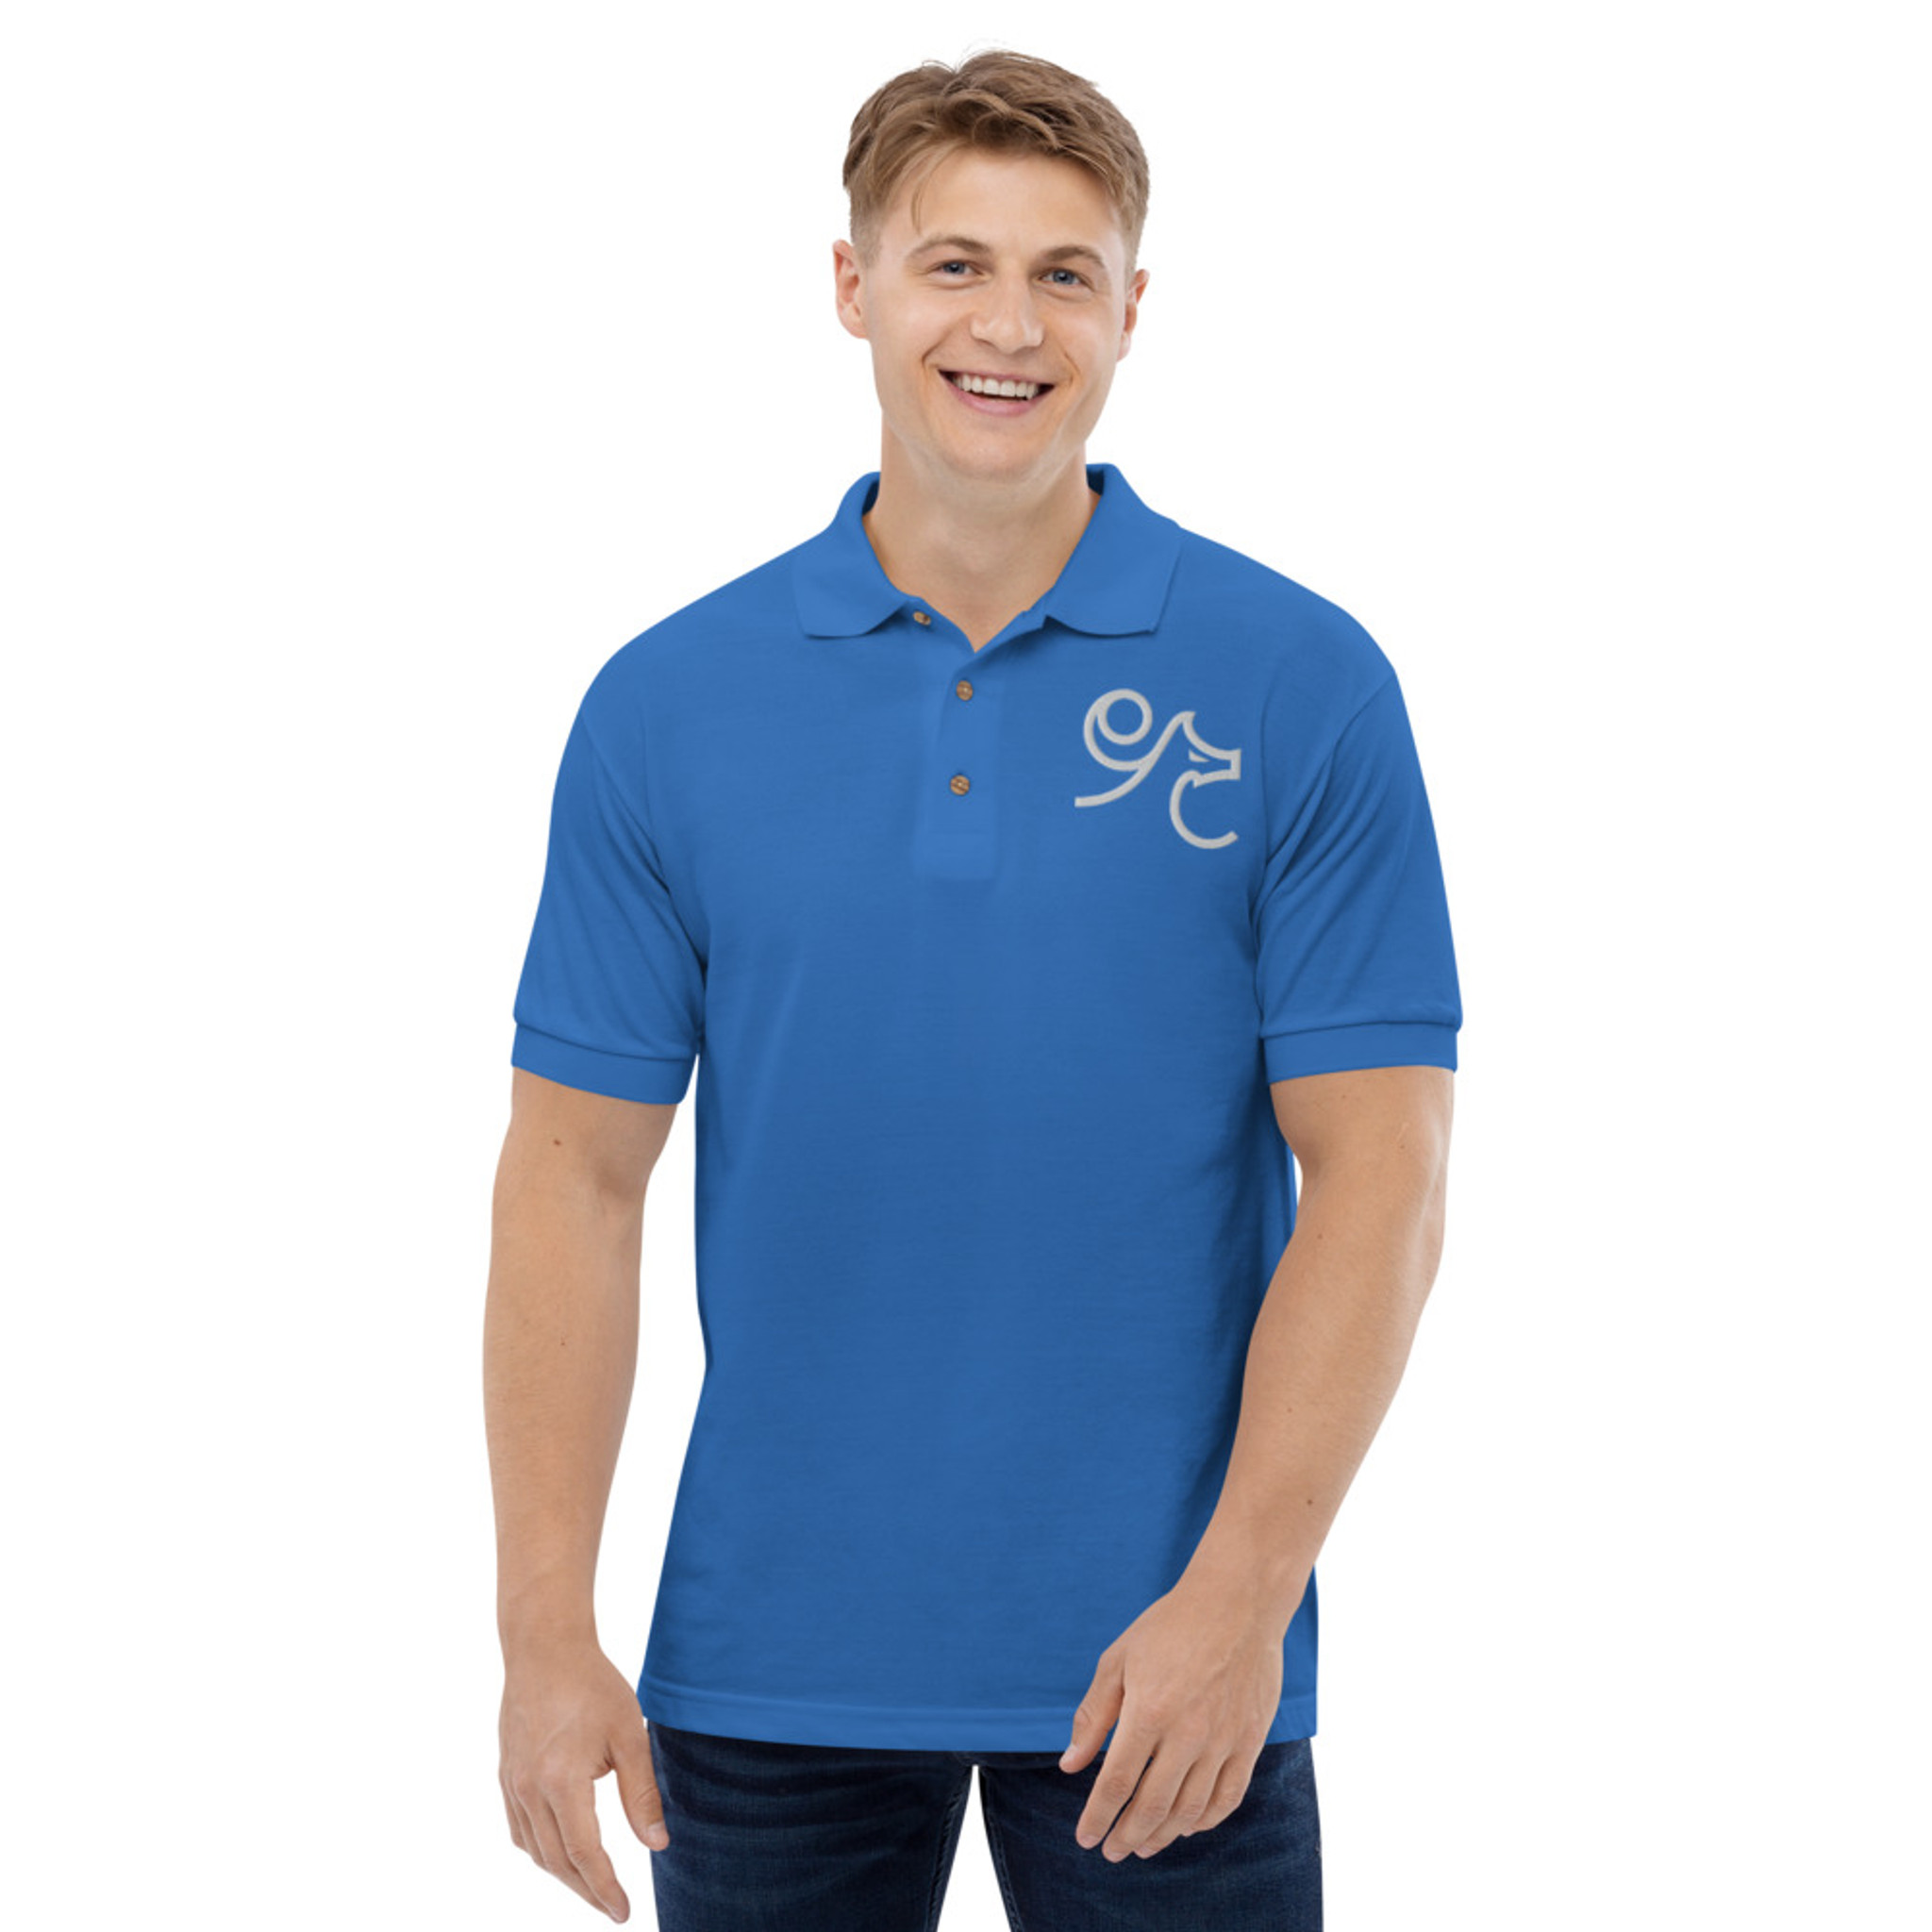 Download New Haven Embroidered Polo Shirt Kap7 International Inc